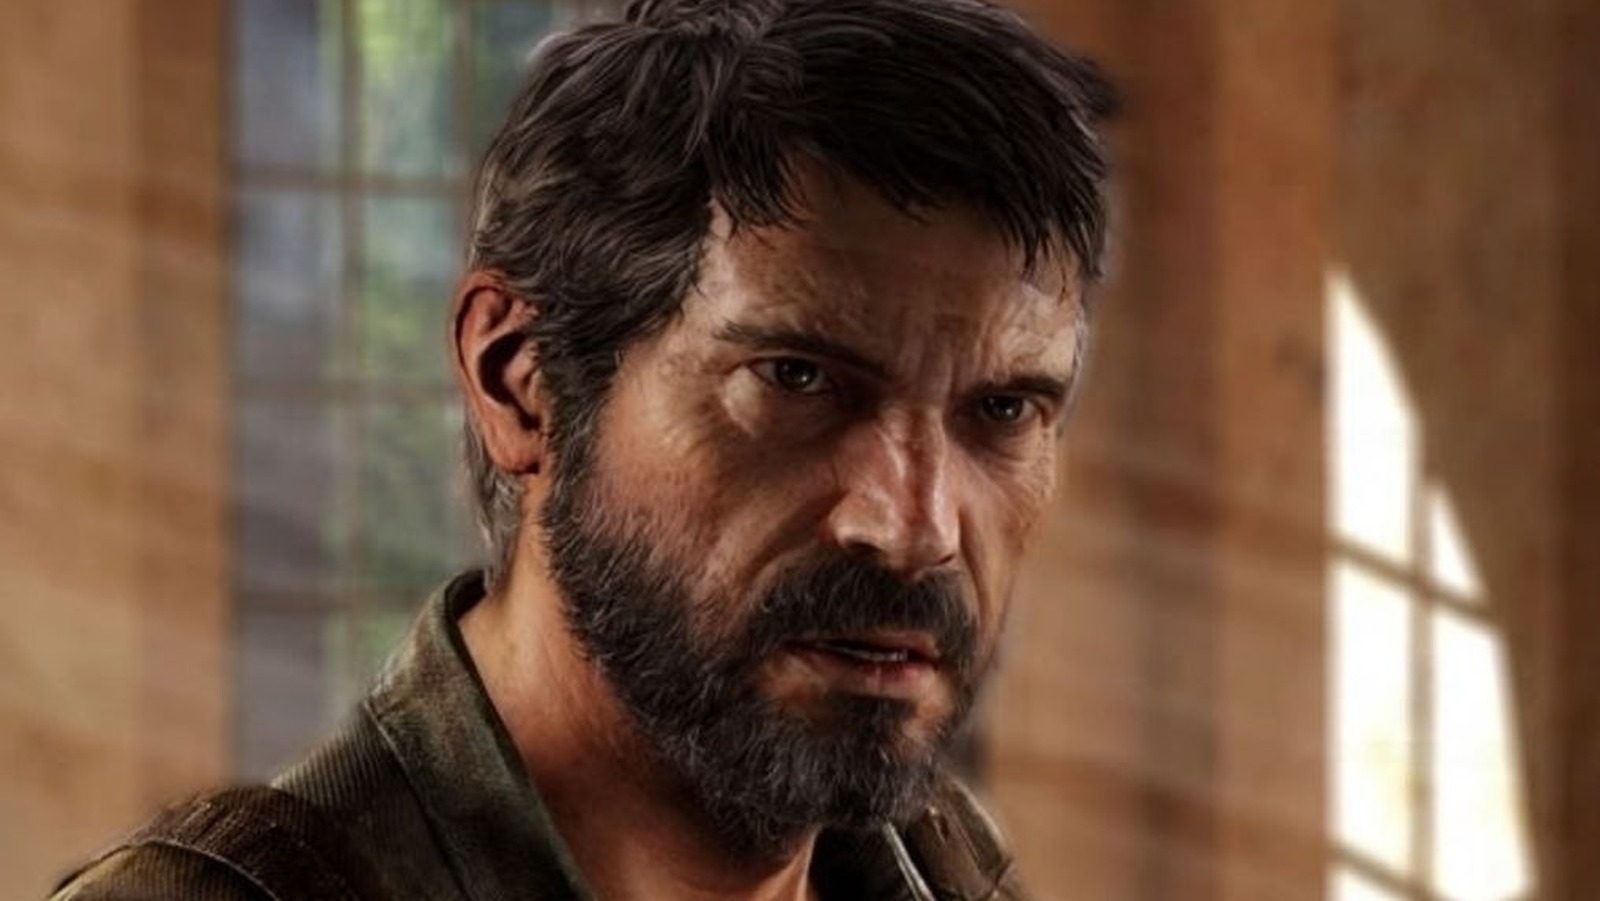 The Last Of Us': 'Game Of Thrones' Breakout Bella Ramsey To Play Ellie –  Deadline